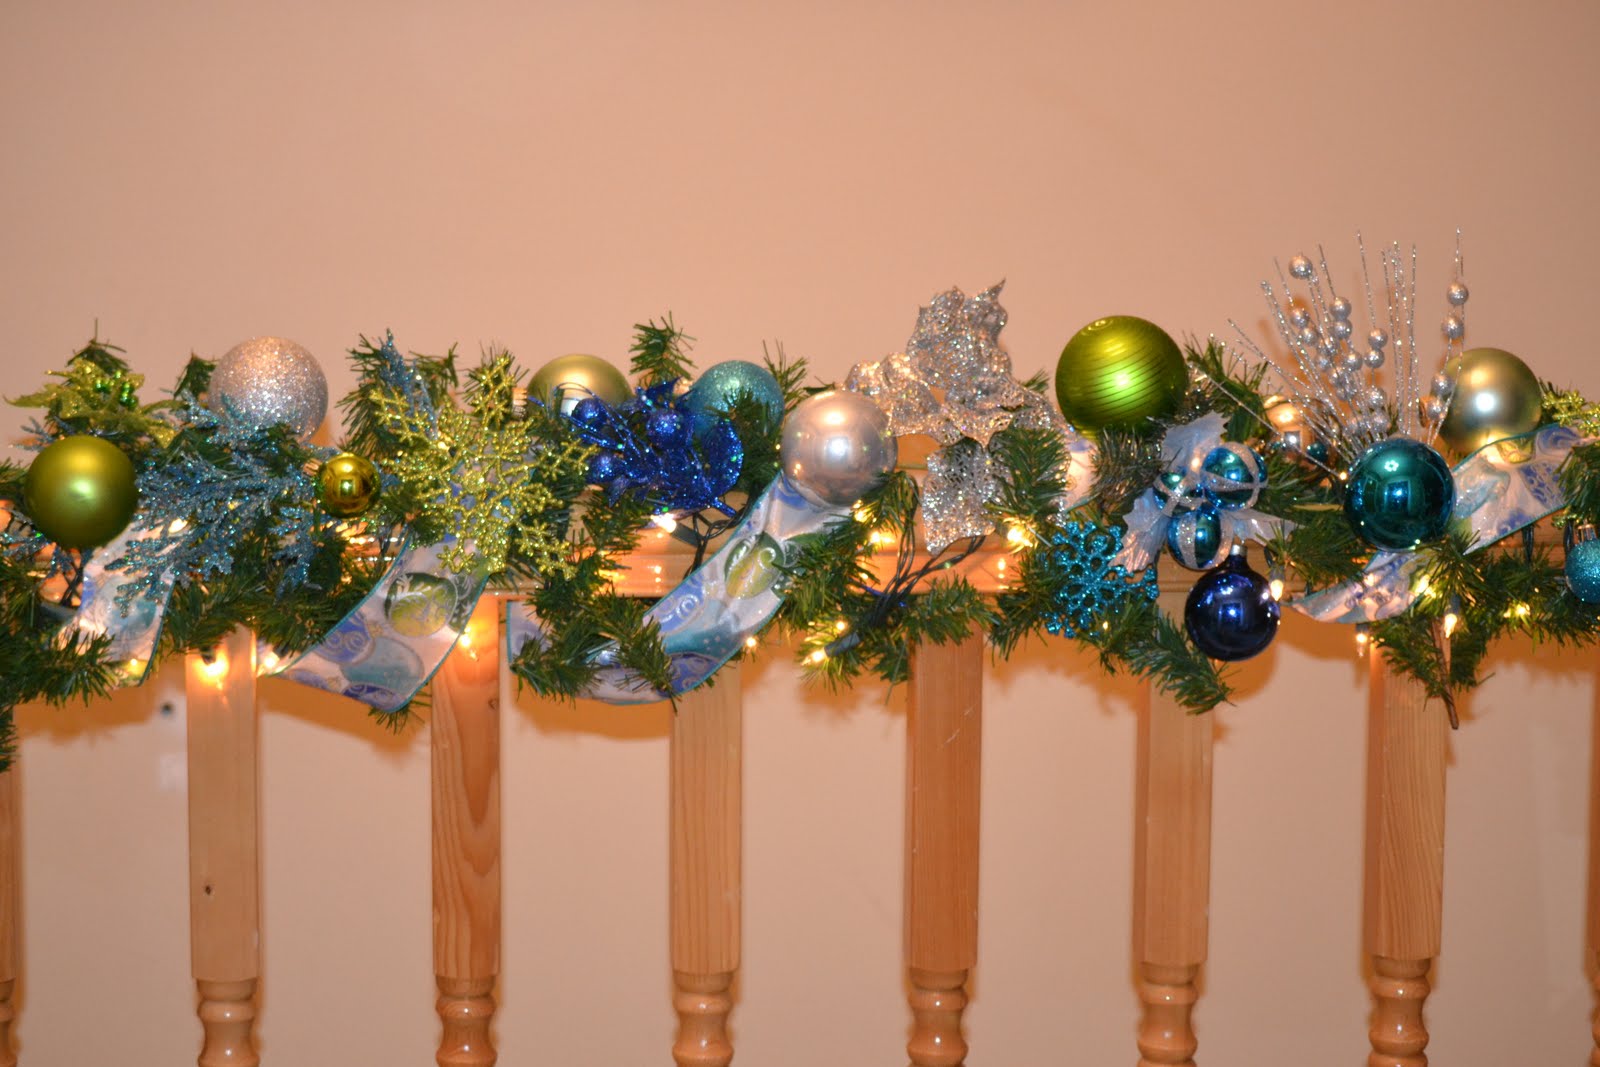 JenNY & AShlEY's ReDOs: Winter Wonderland Wreaths